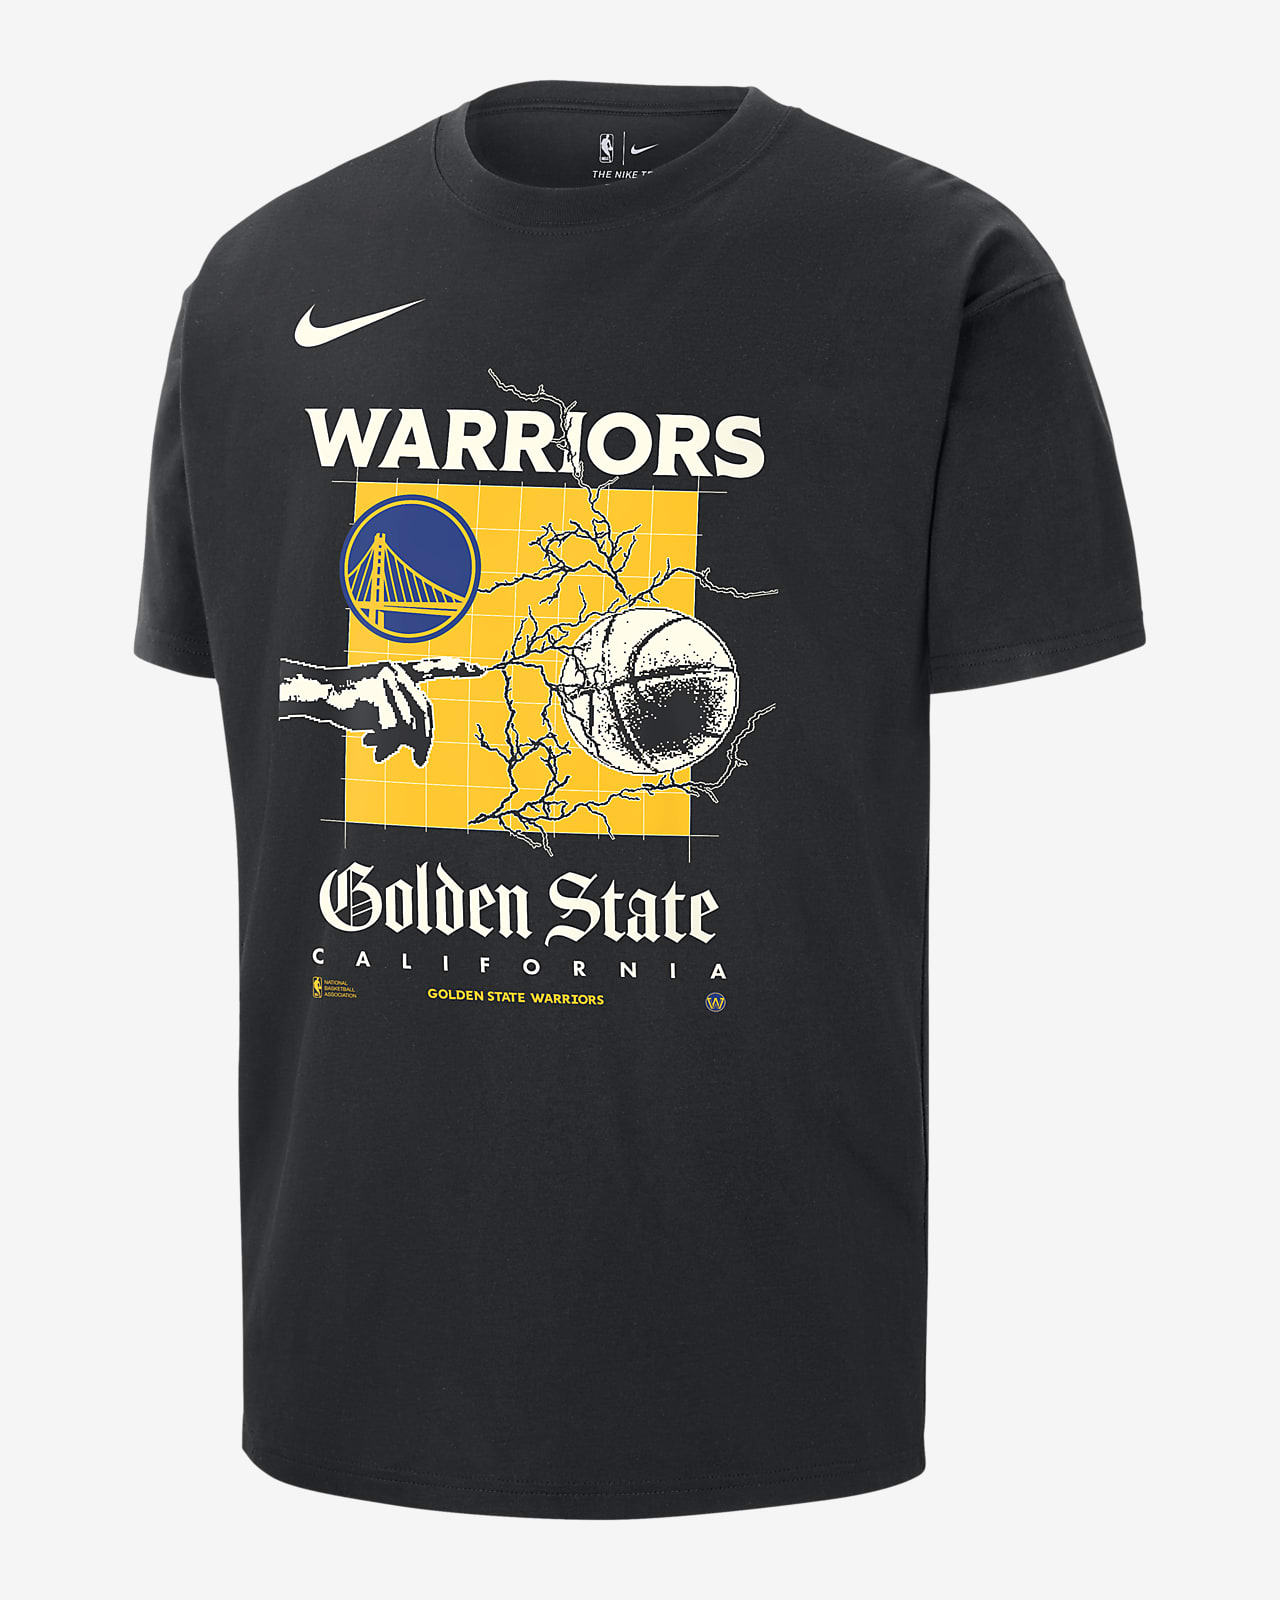 Golden State Warriors Courtside Men's Nike NBA Max90 T-Shirt